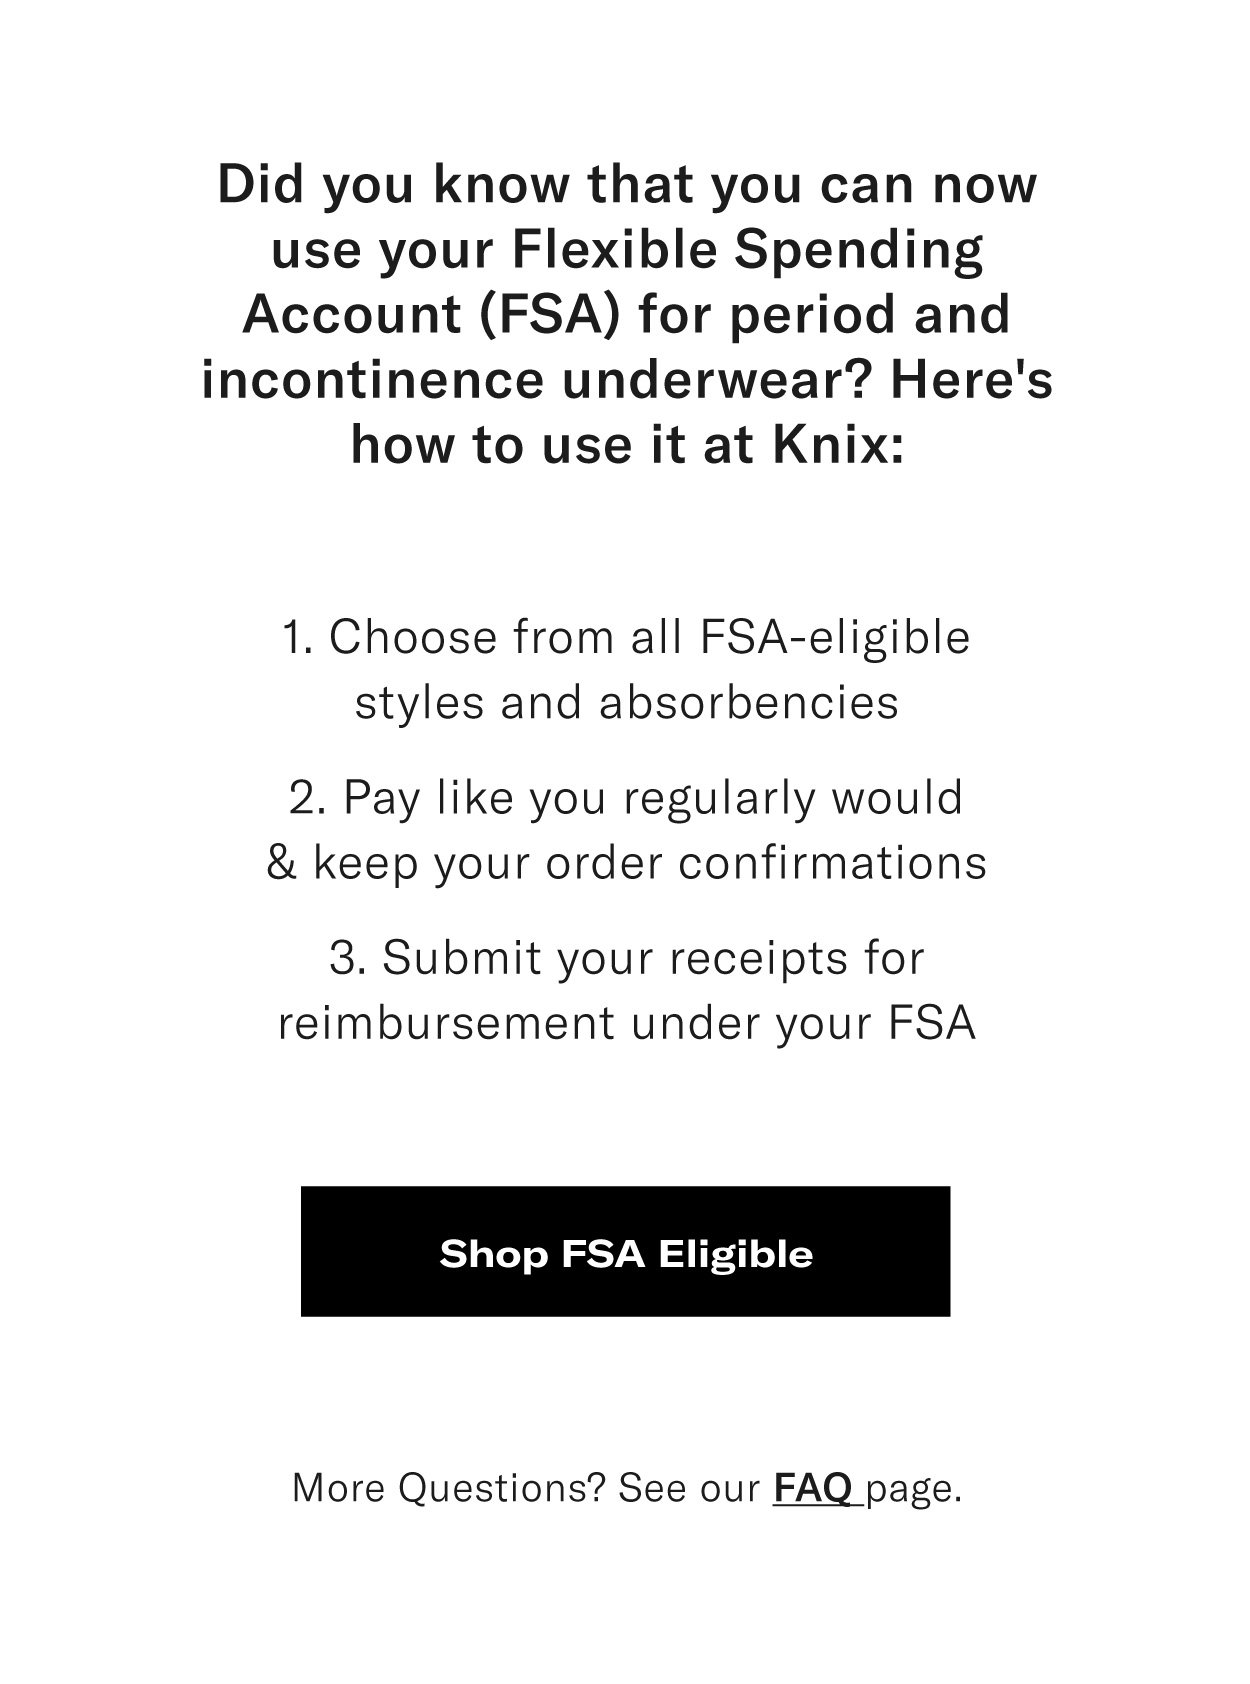 Knix: TO DO: Use That FSA